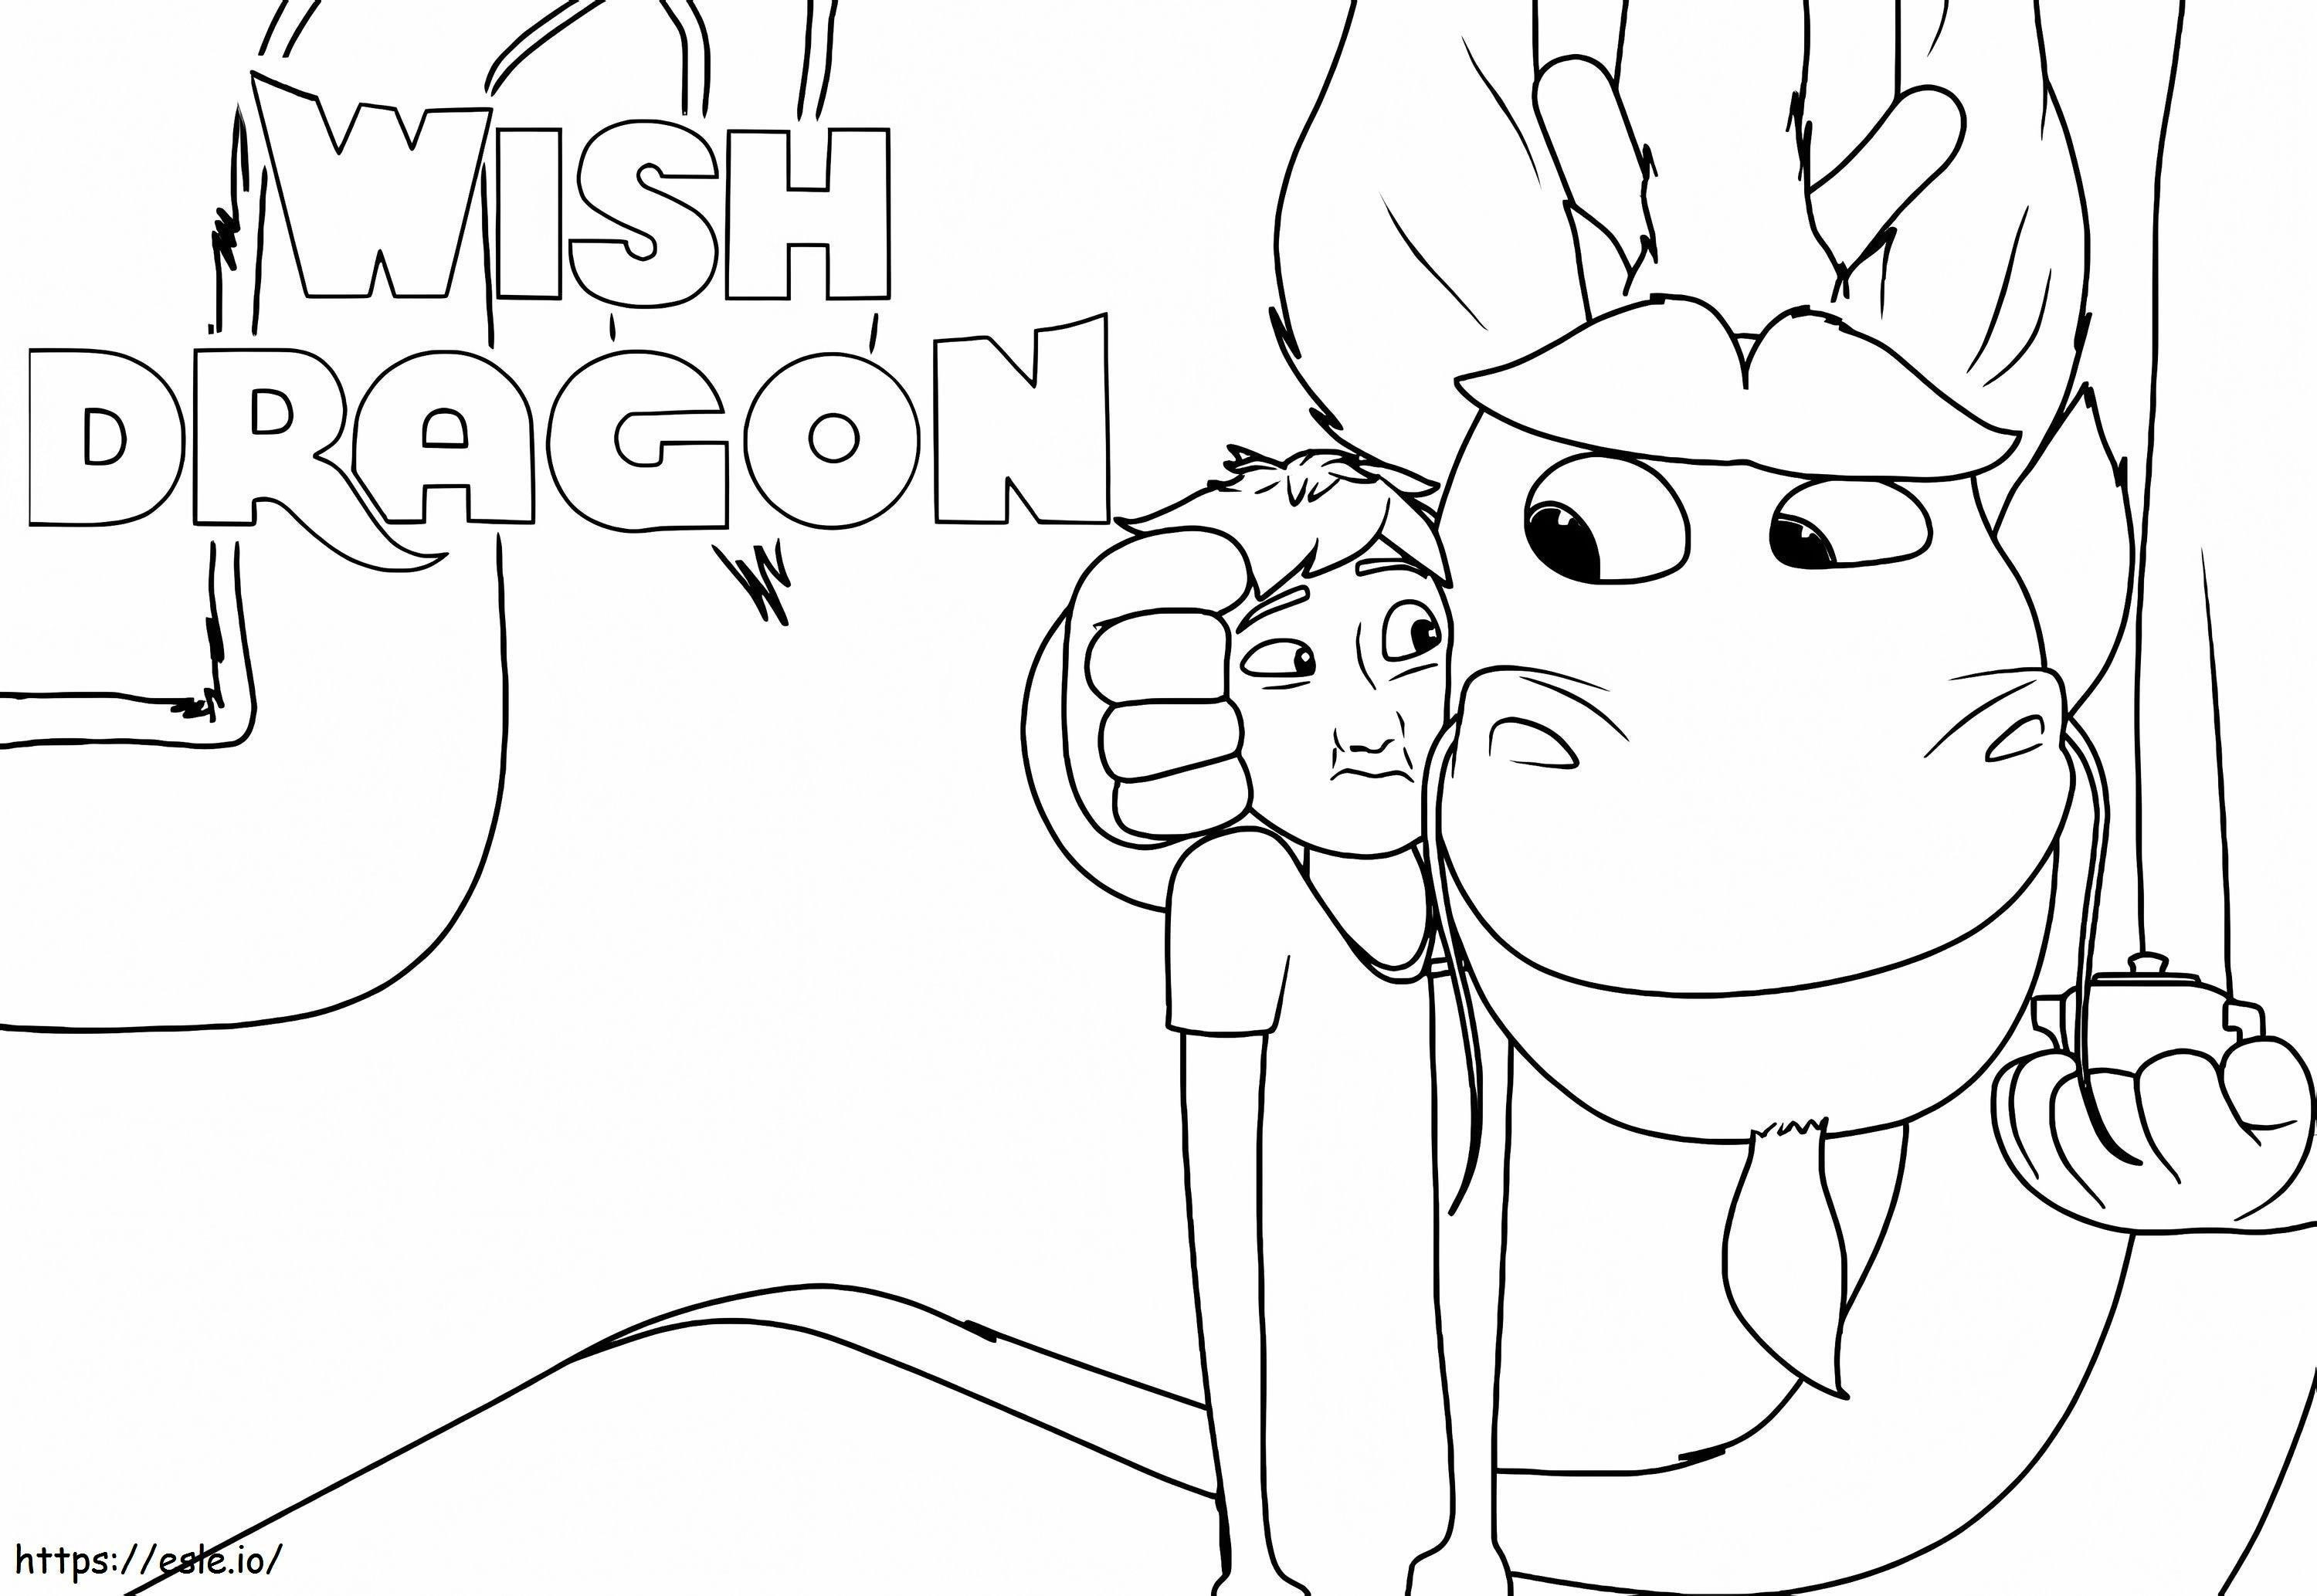 Free Printable Wish Dragon coloring page